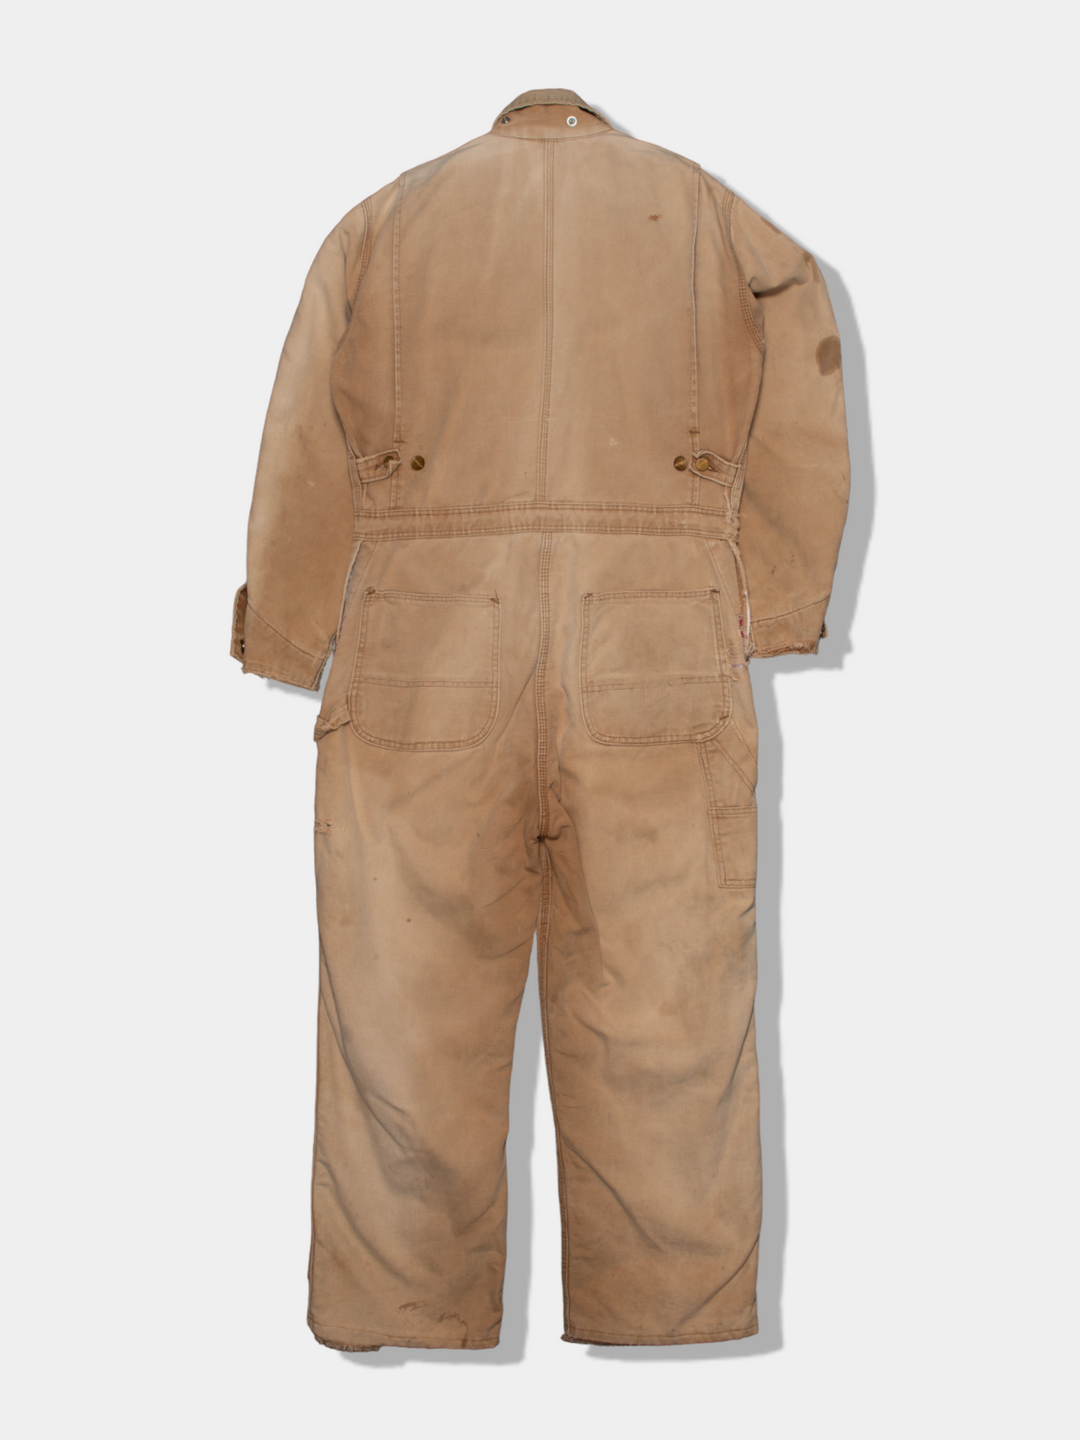 Vintage Carhartt Boiler Suit (M)